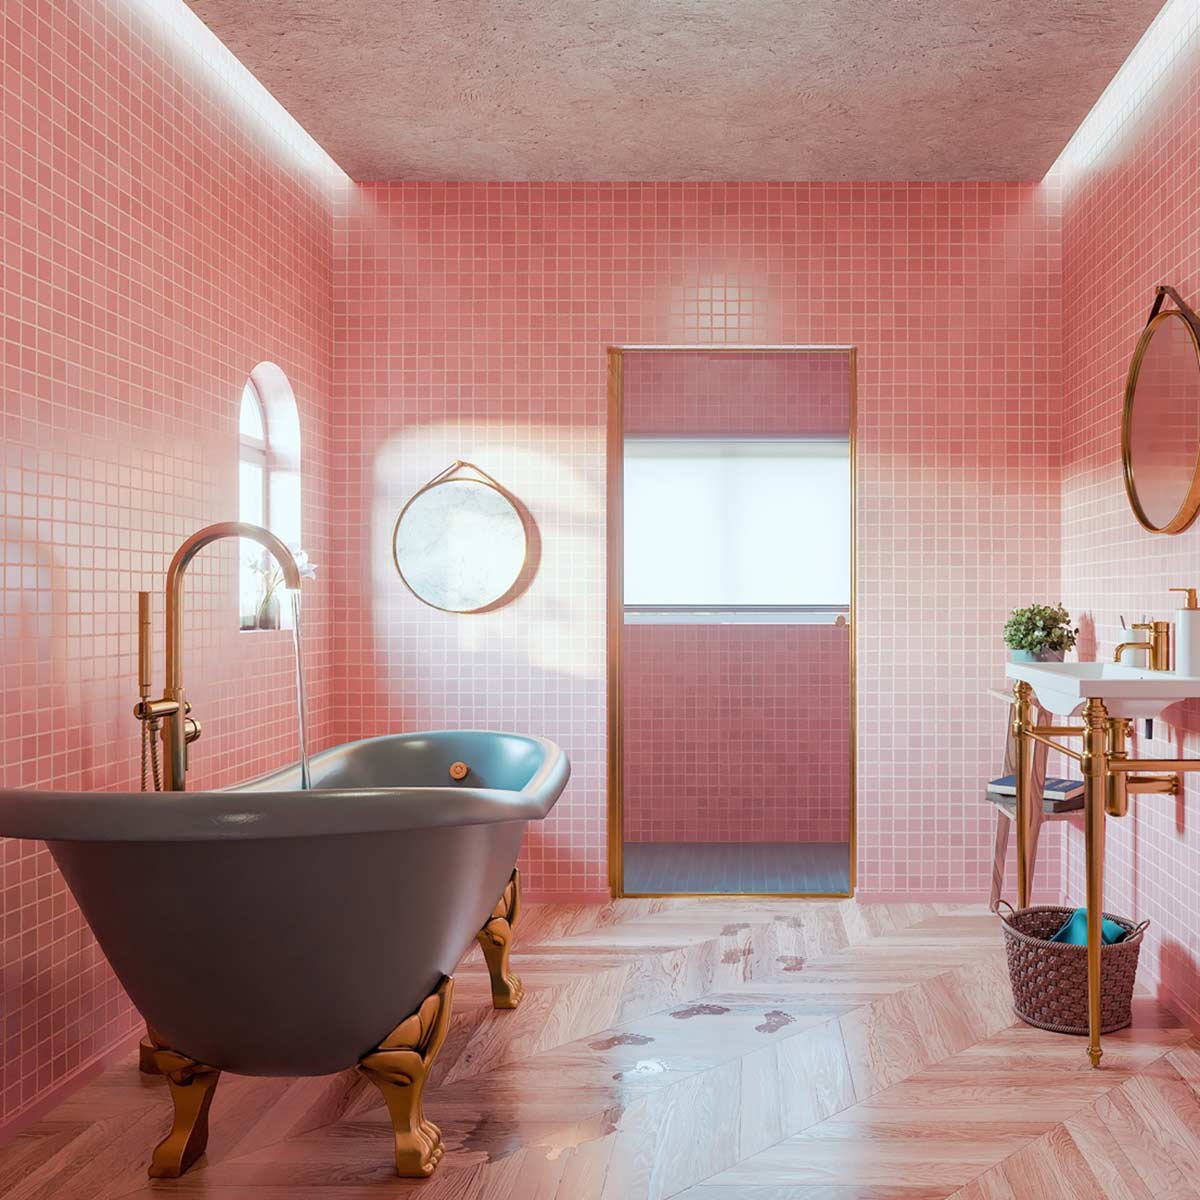 Phòng tắm theo bảng màu của Wes Anderson. Nguồn: home-designing